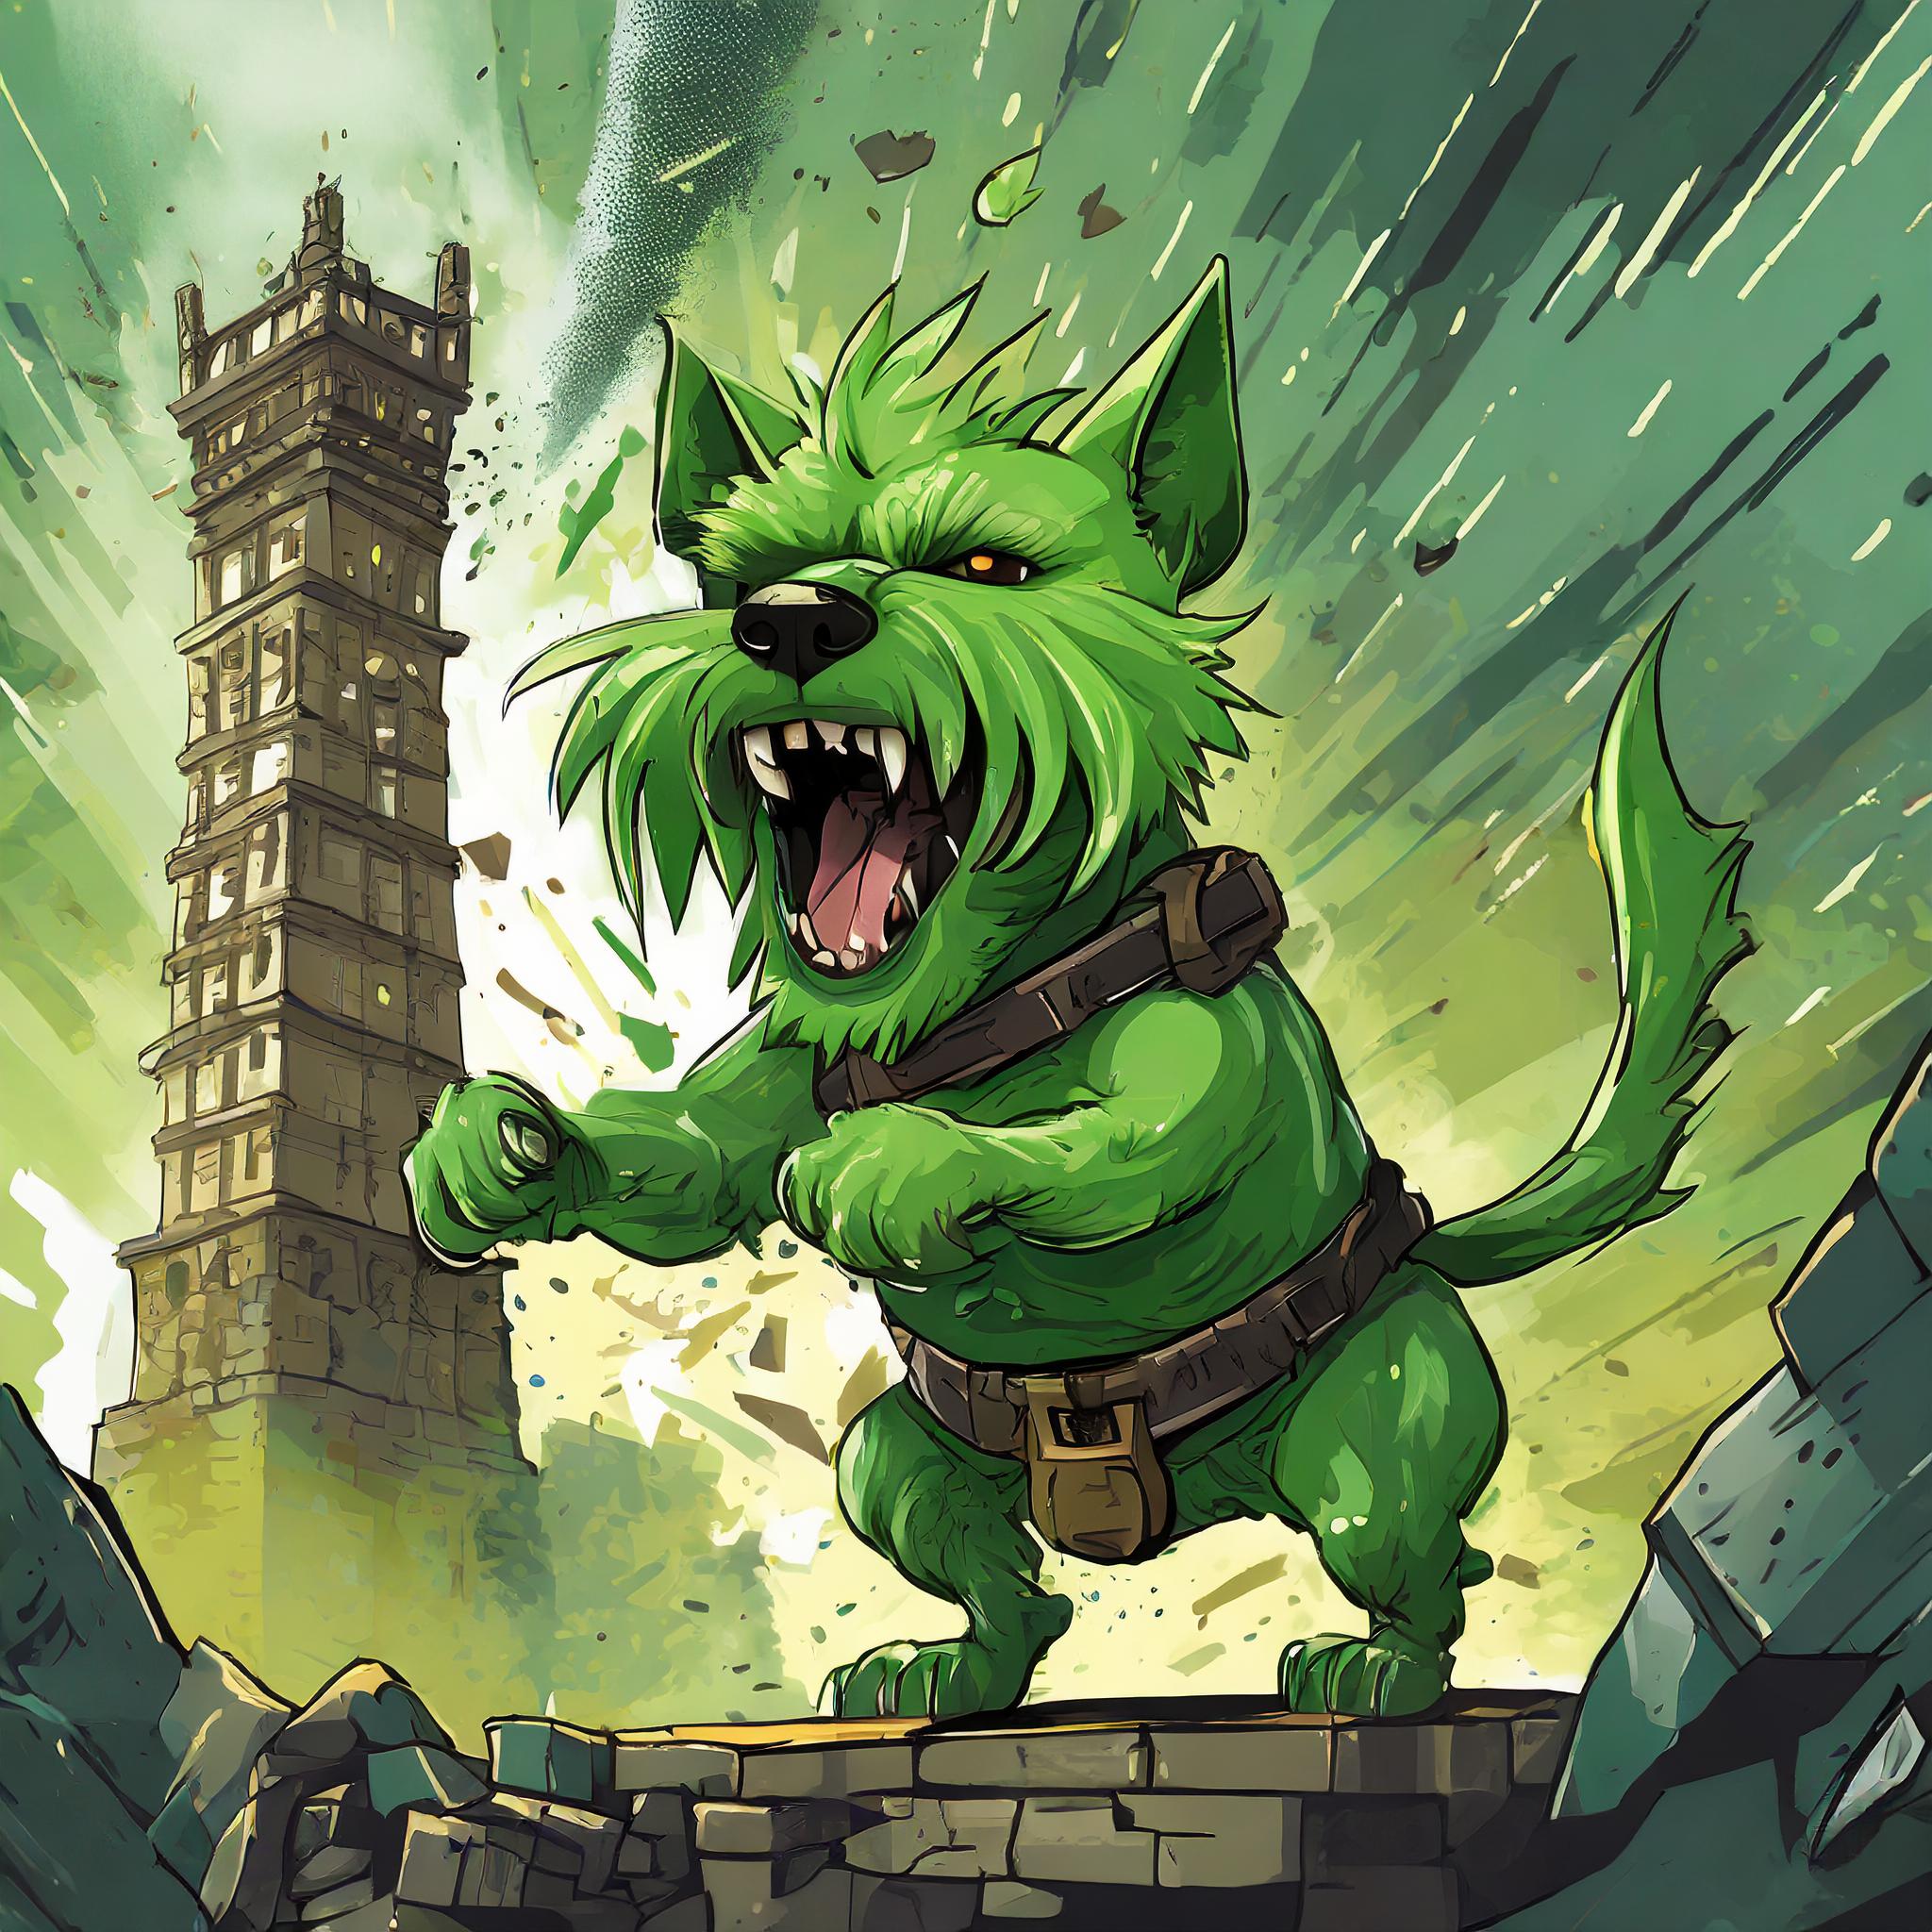 Firefly green hulk terrier smashing a tower 61534.jpg